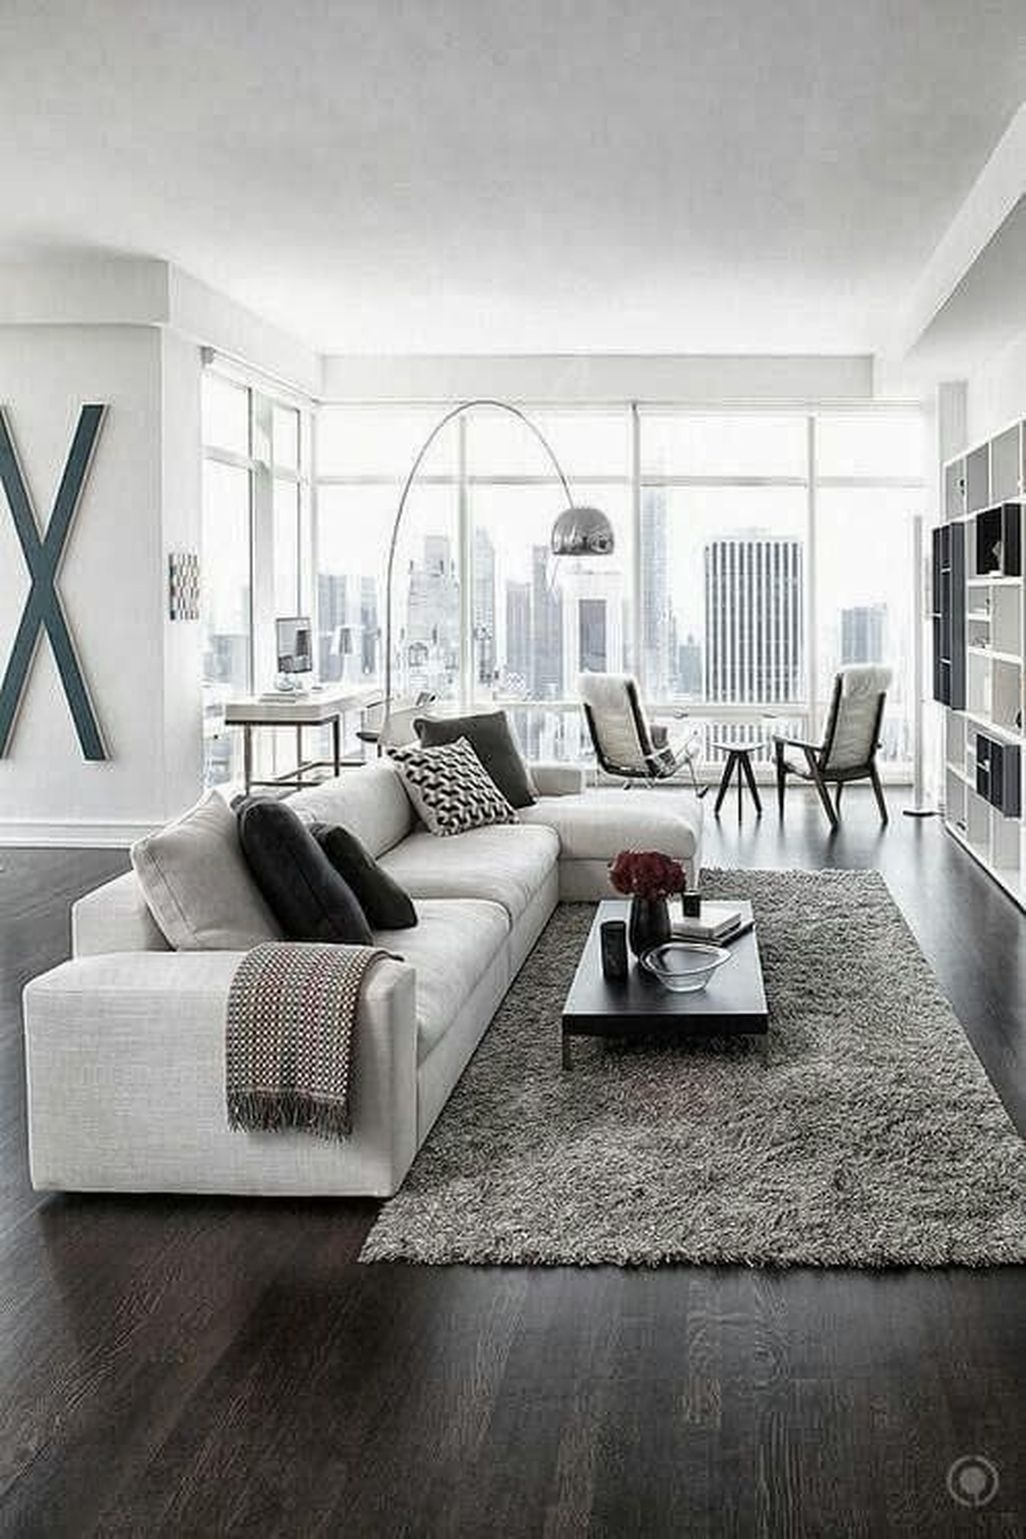 Most popular interior design ideas for living room 40